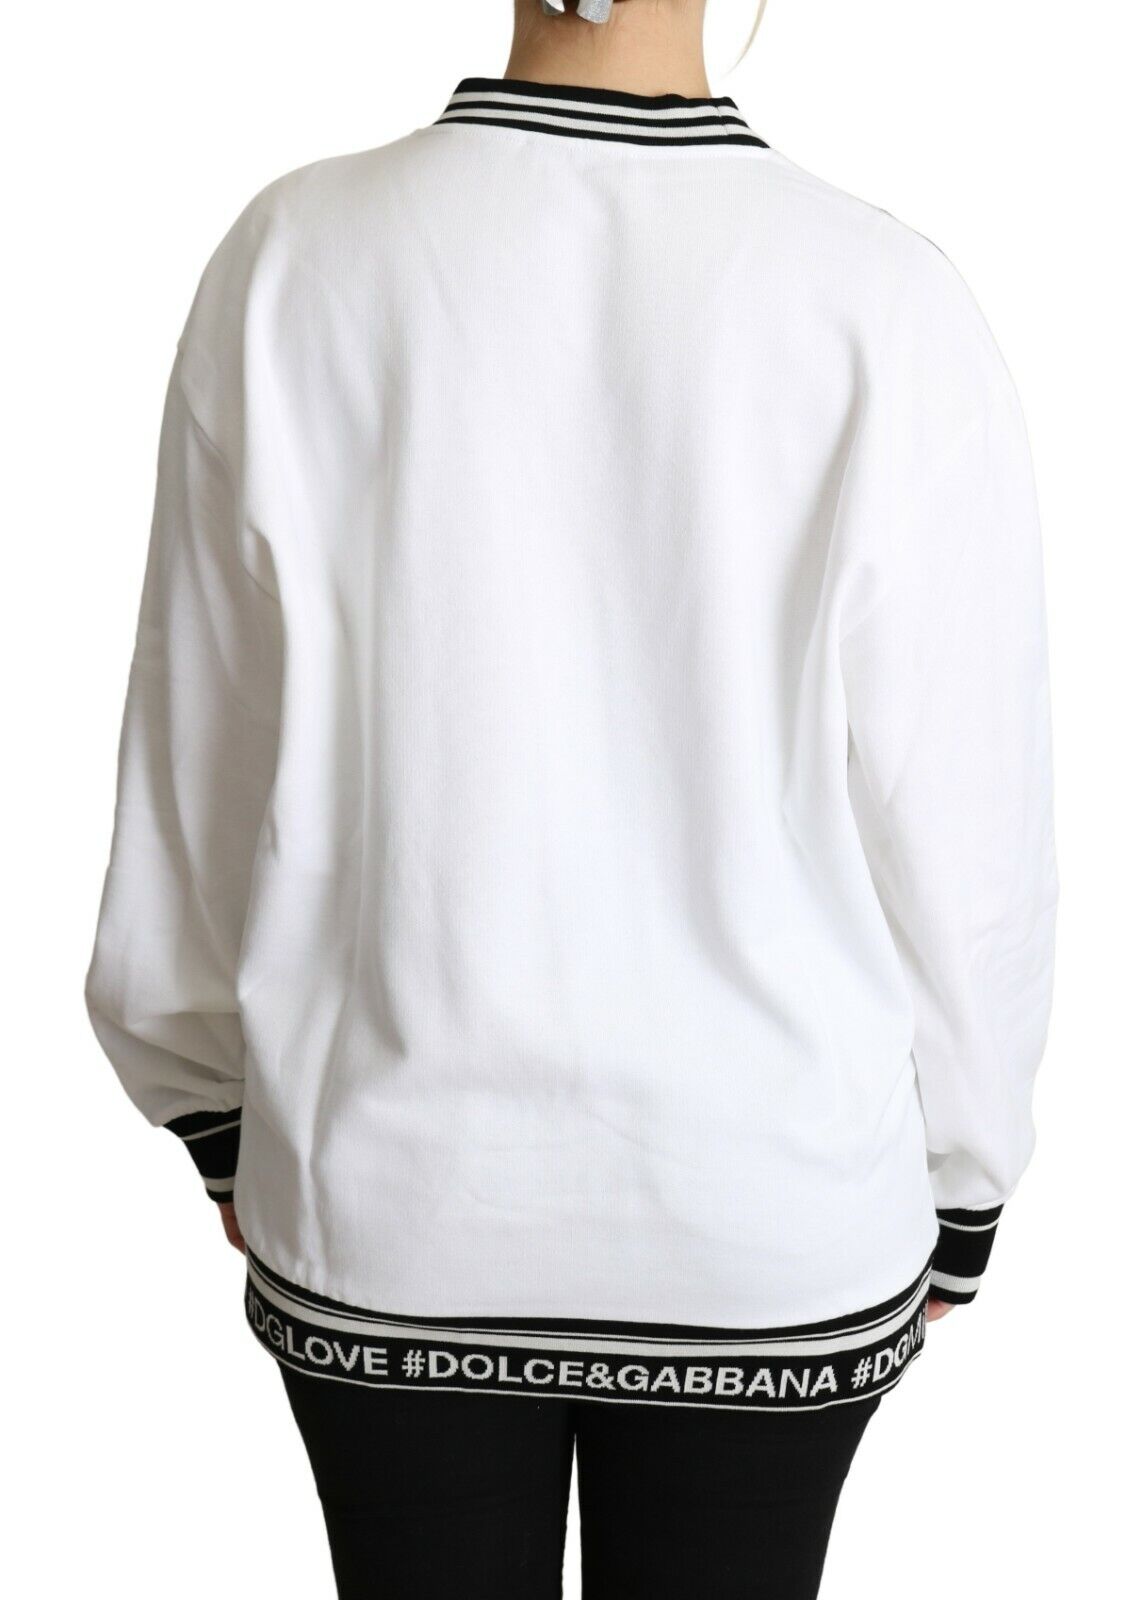 DOLCE & GABBANA Millennials Sweater White Logo Top Pullover IT40/US6/S $1000